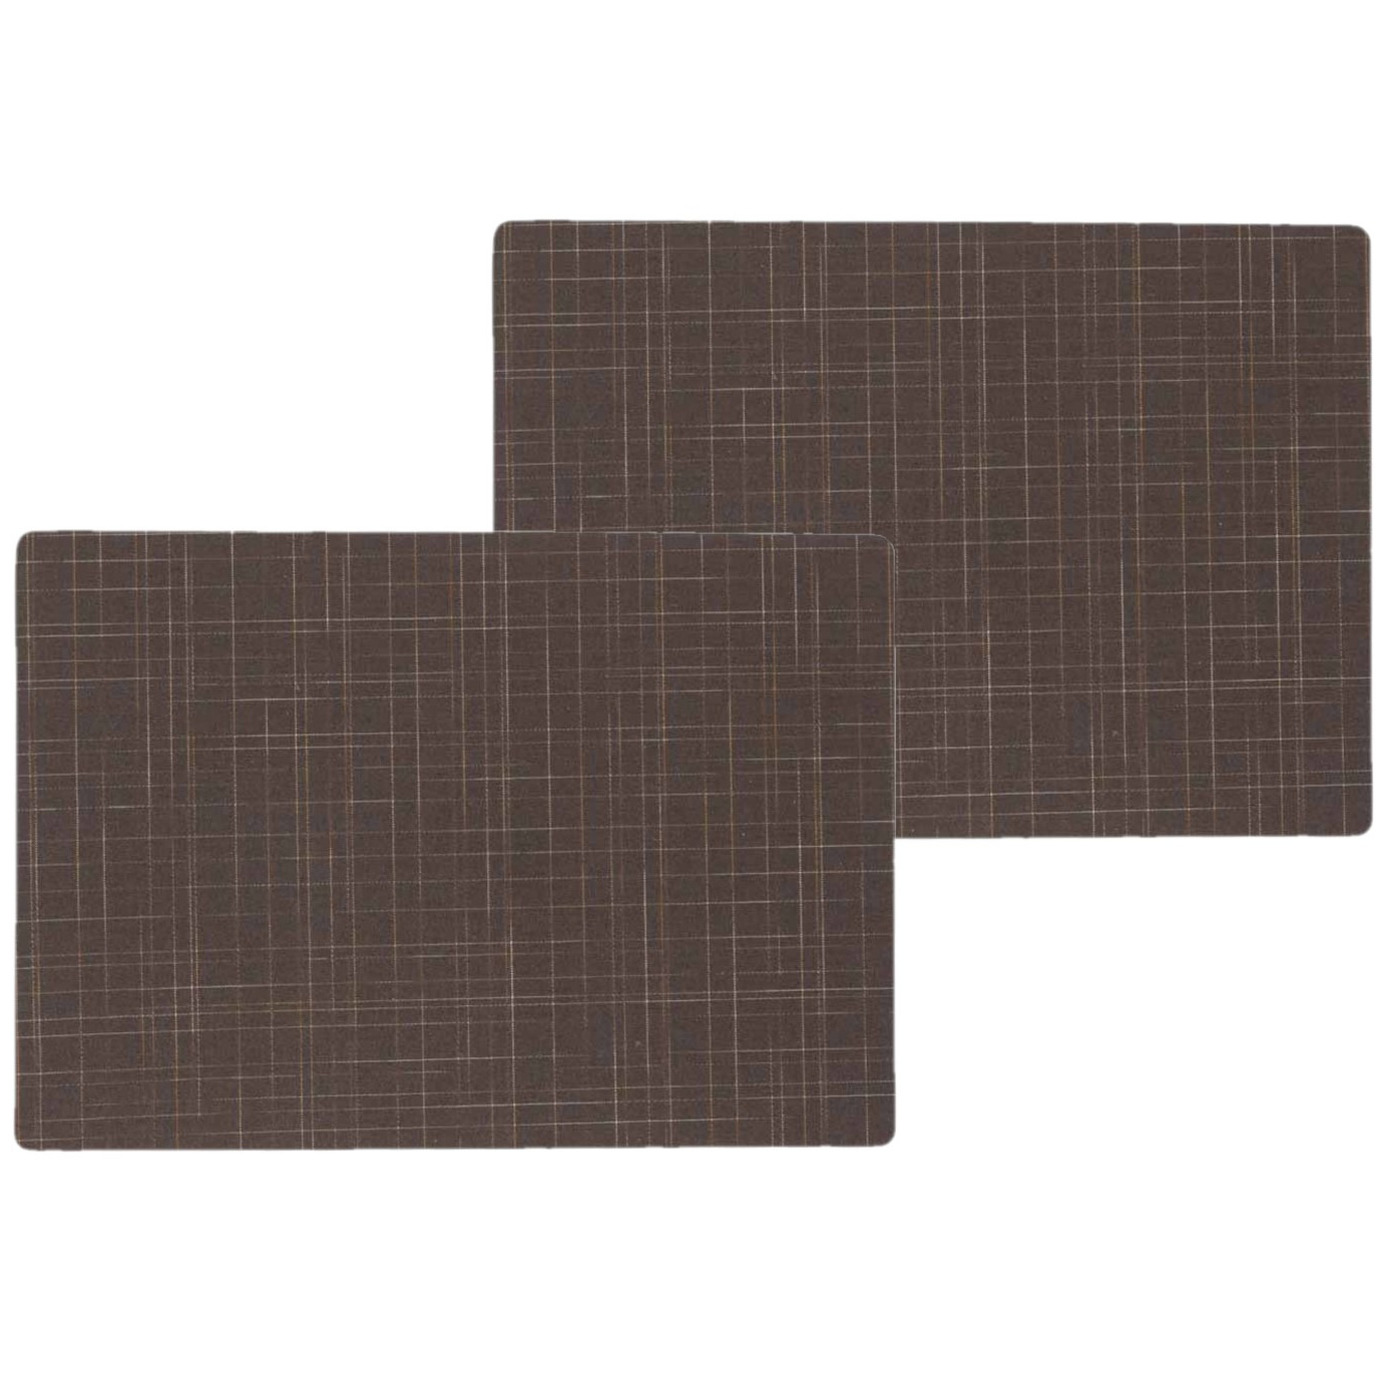 Wicotex 10x stuks stevige luxe Tafel placemats Liso bruin 30 x 43 cm -